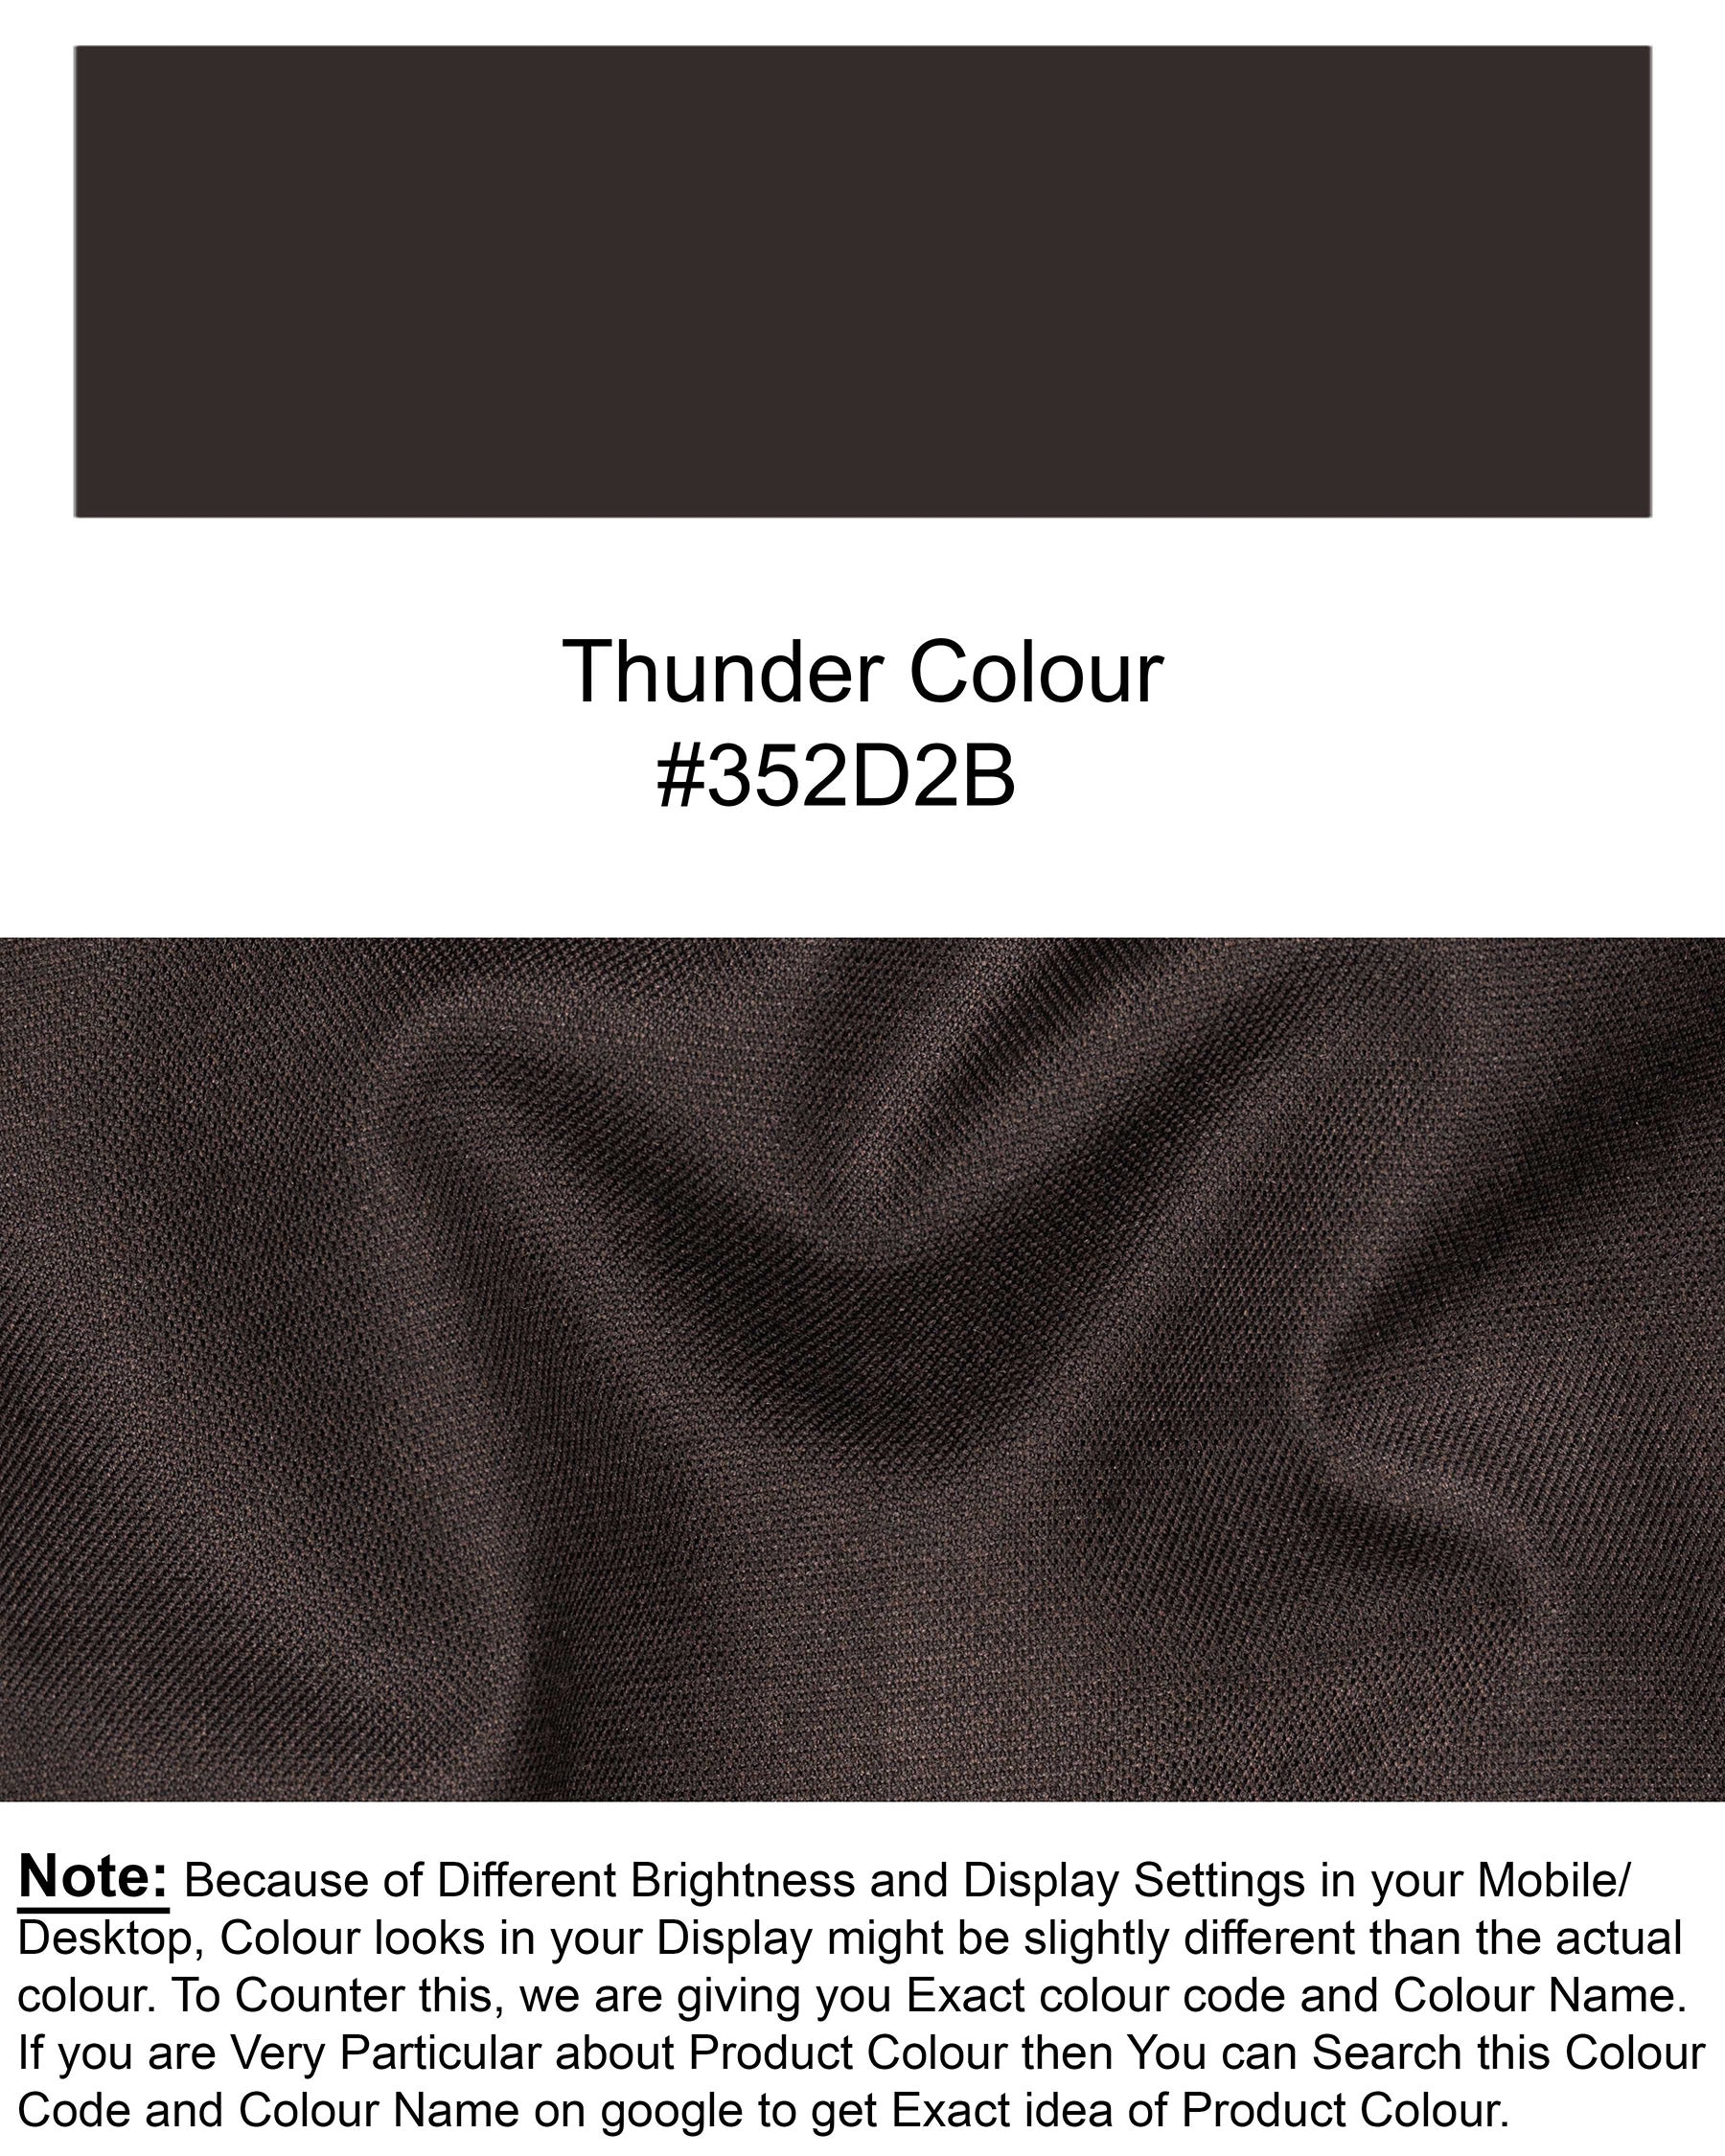 Thunder Brown Single Breasted Blazer BL1833-SB-36, BL1833-SB-38, BL1833-SB-40, BL1833-SB-42, BL1833-SB-44, BL1833-SB-46, BL1833-SB-48, BL1833-SB-50, BL1833-SB-52, BL1833-SB-54, BL1833-SB-56, BL1833-SB-58, BL1833-SB-60